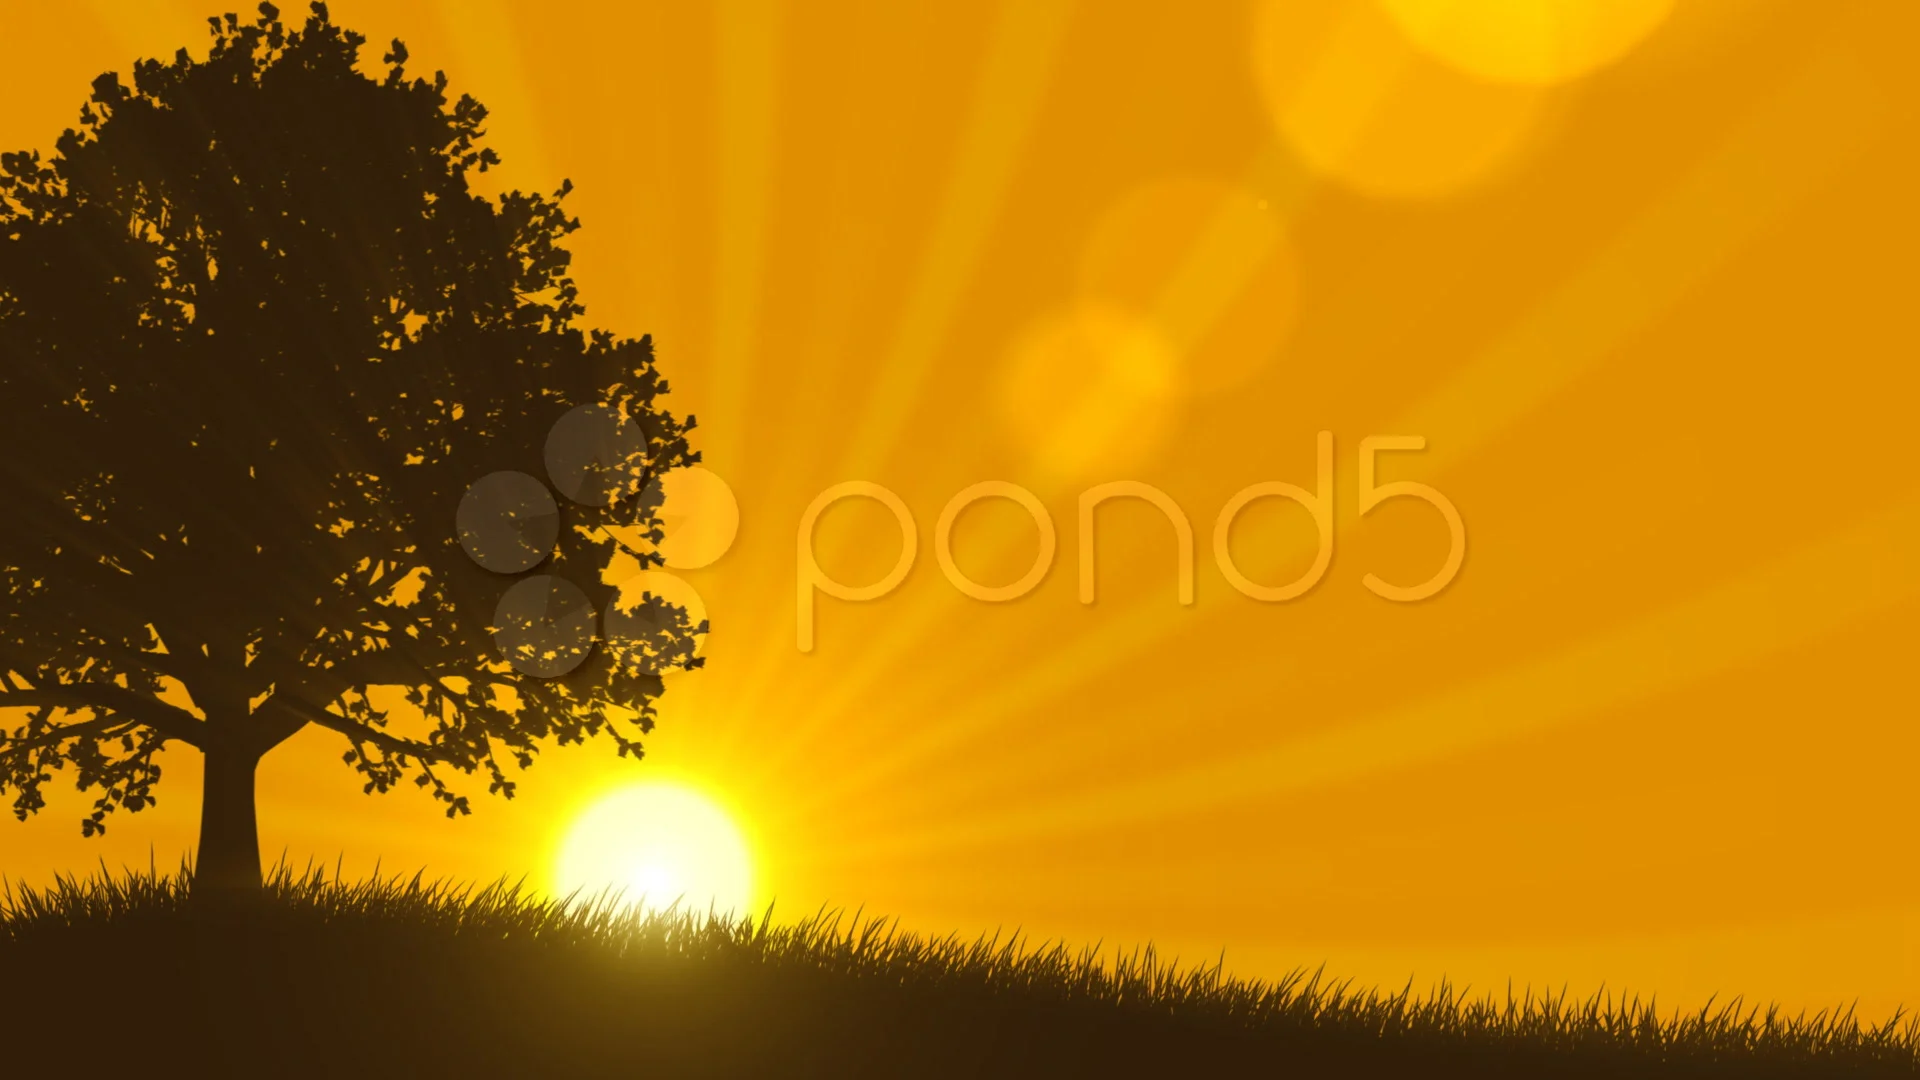 4 Seasons: Summer (Animated Background) | Stock Video | Pond5